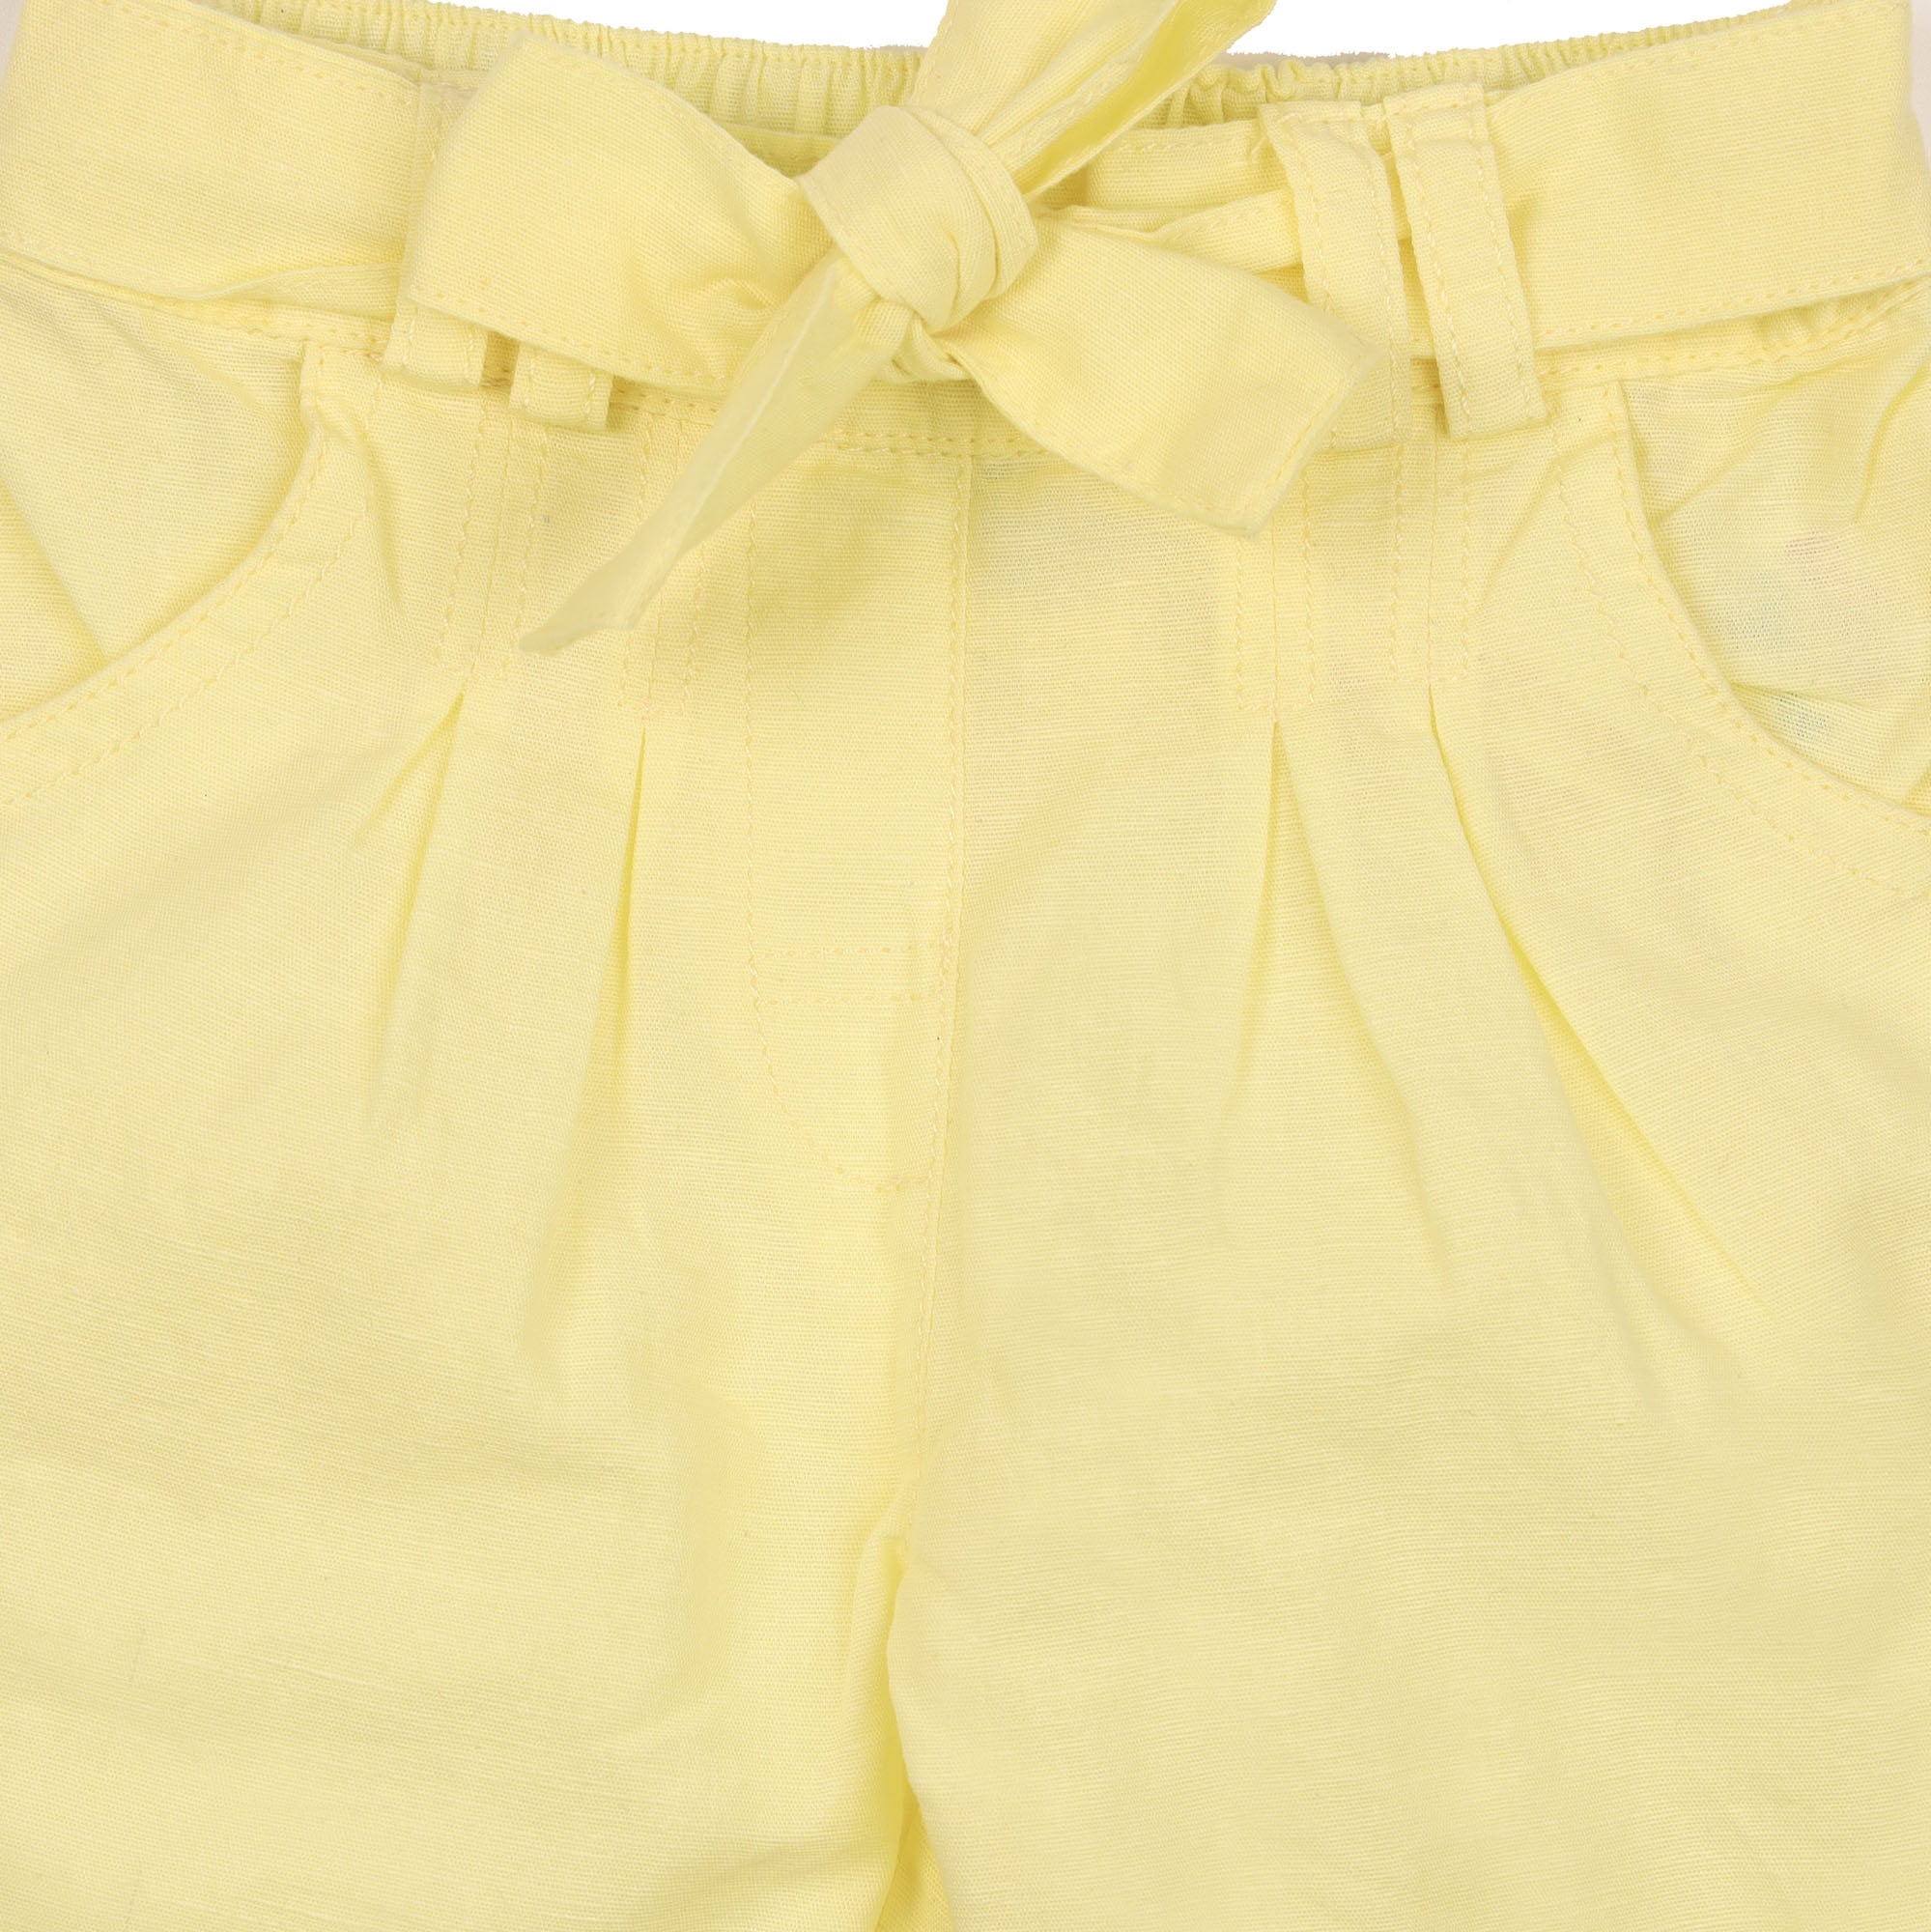 Kicks & Crawl- Hello Yellow Baby Shorts with Bow